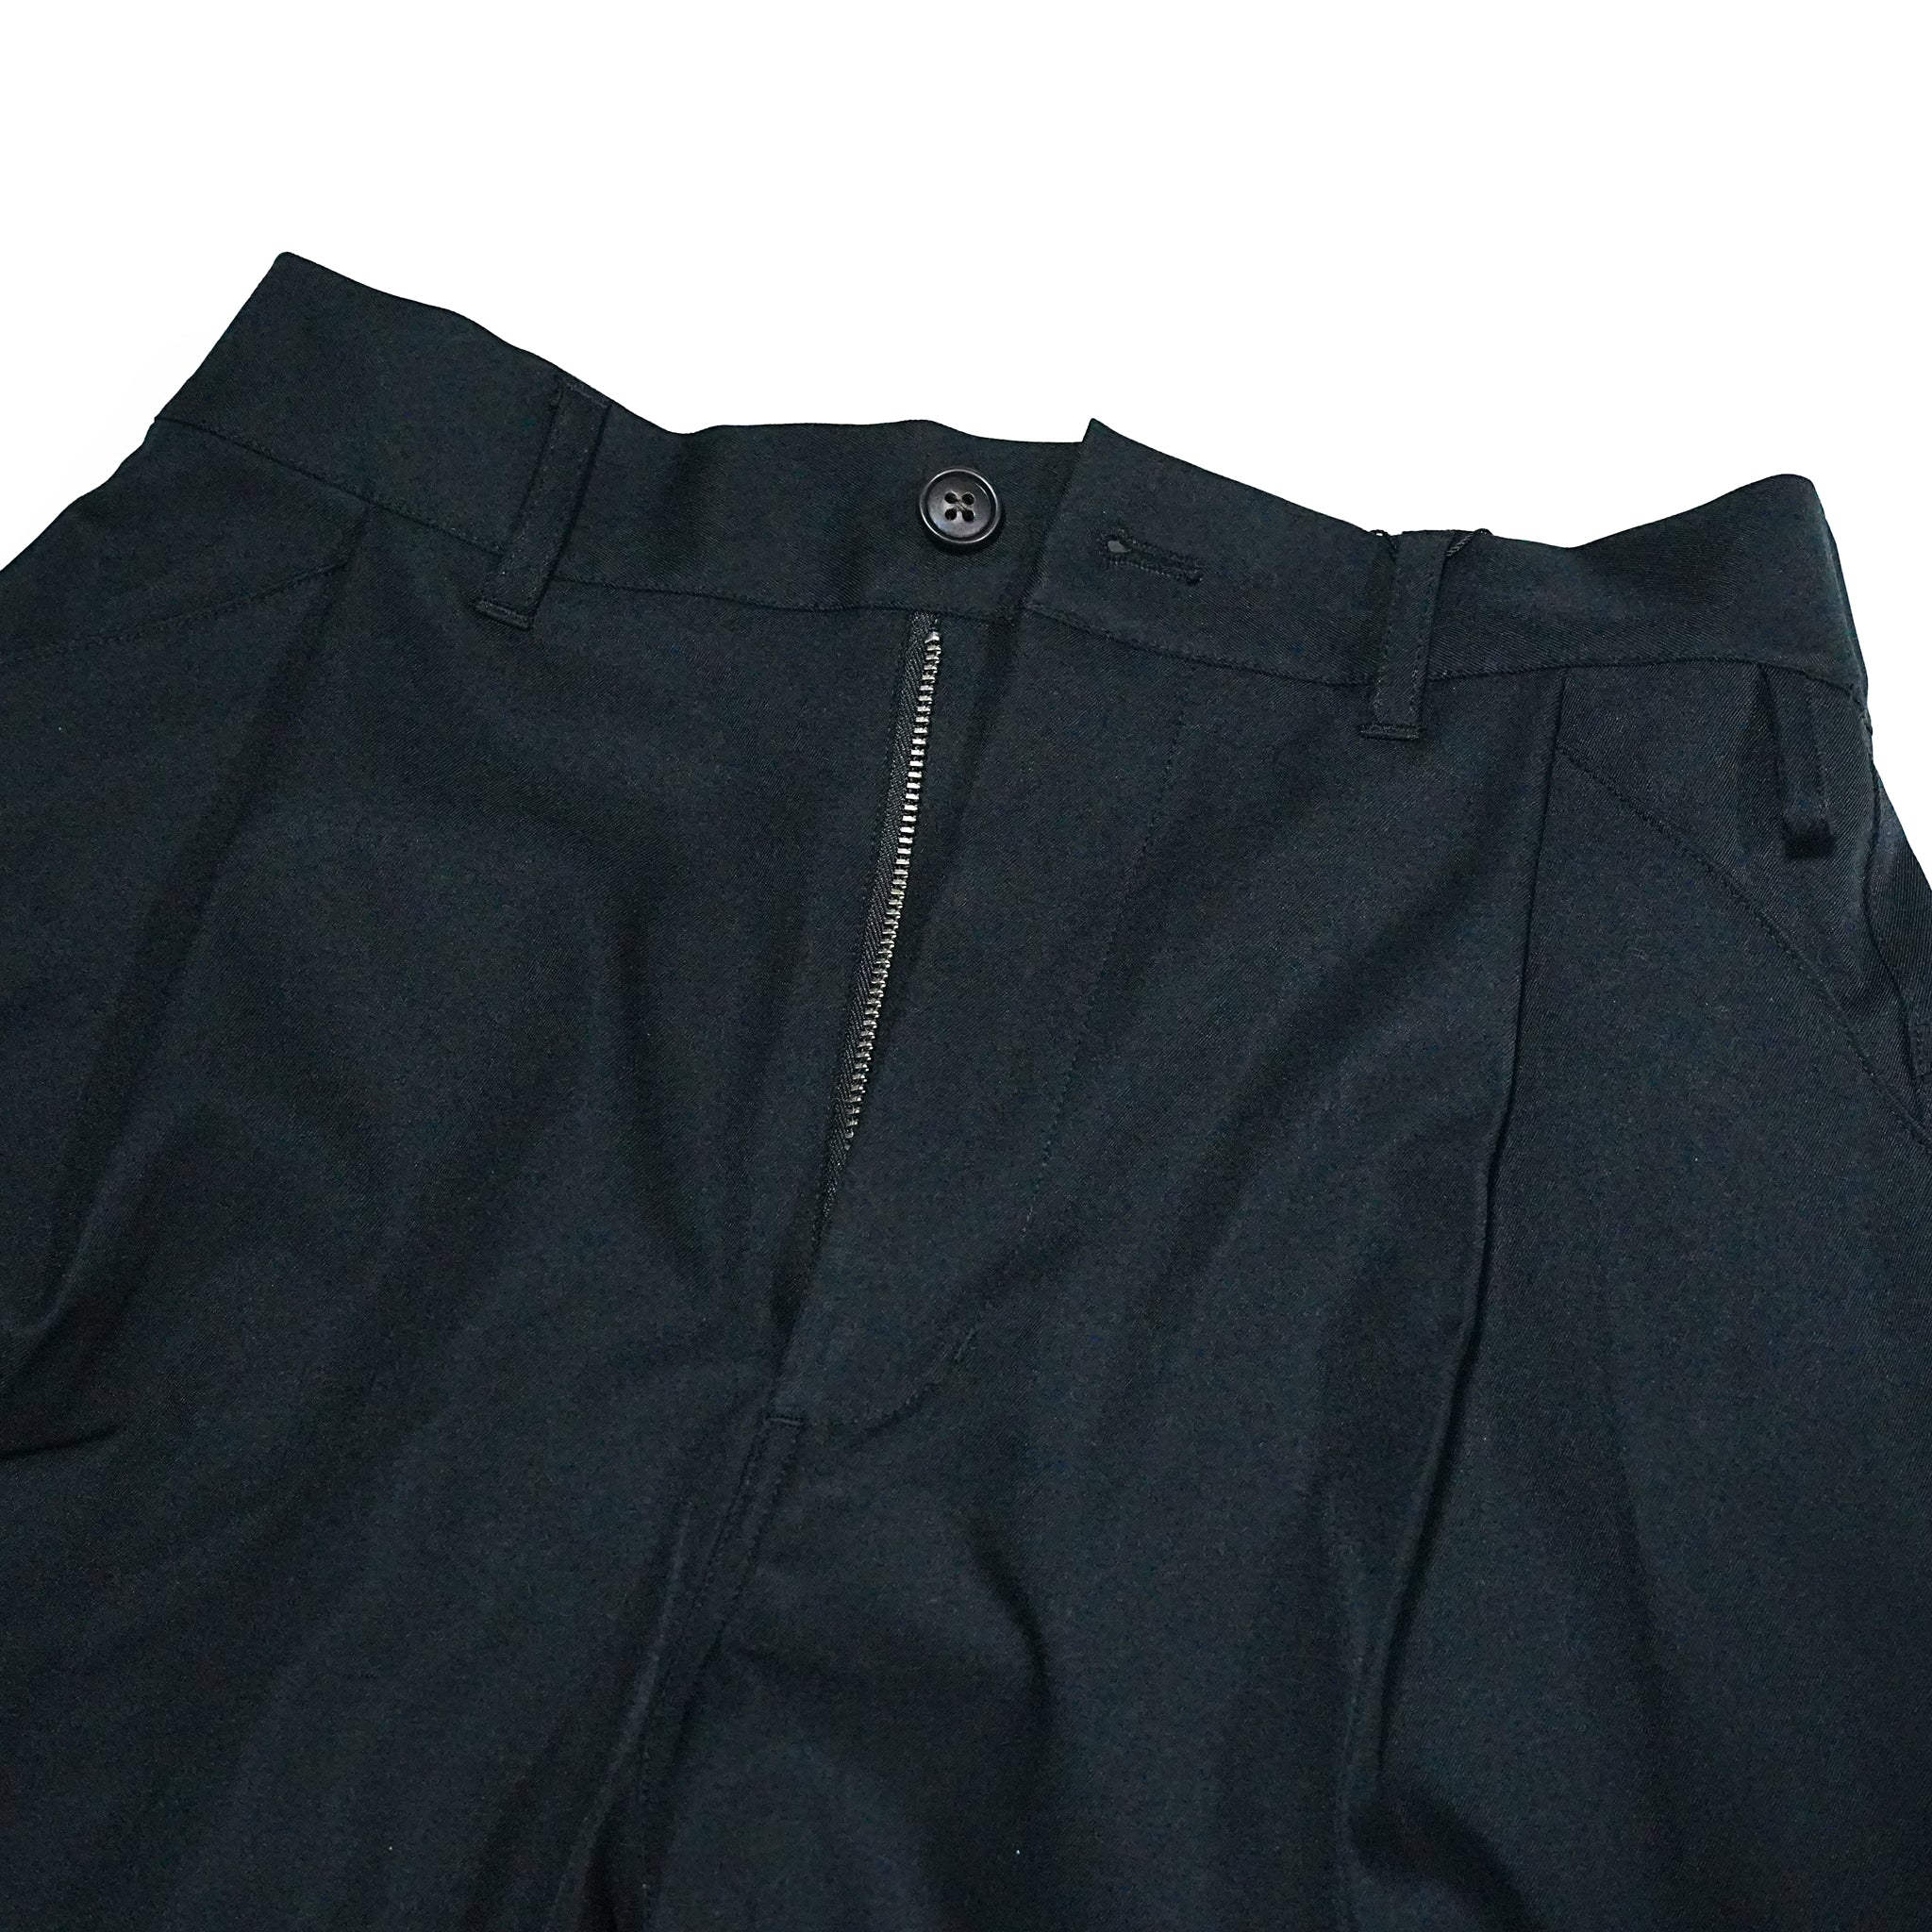 No:23235-9733WH | Name:Work trousers | Color:Black(09)【Garance et Violette_ギャランスエトヴァイオレット】